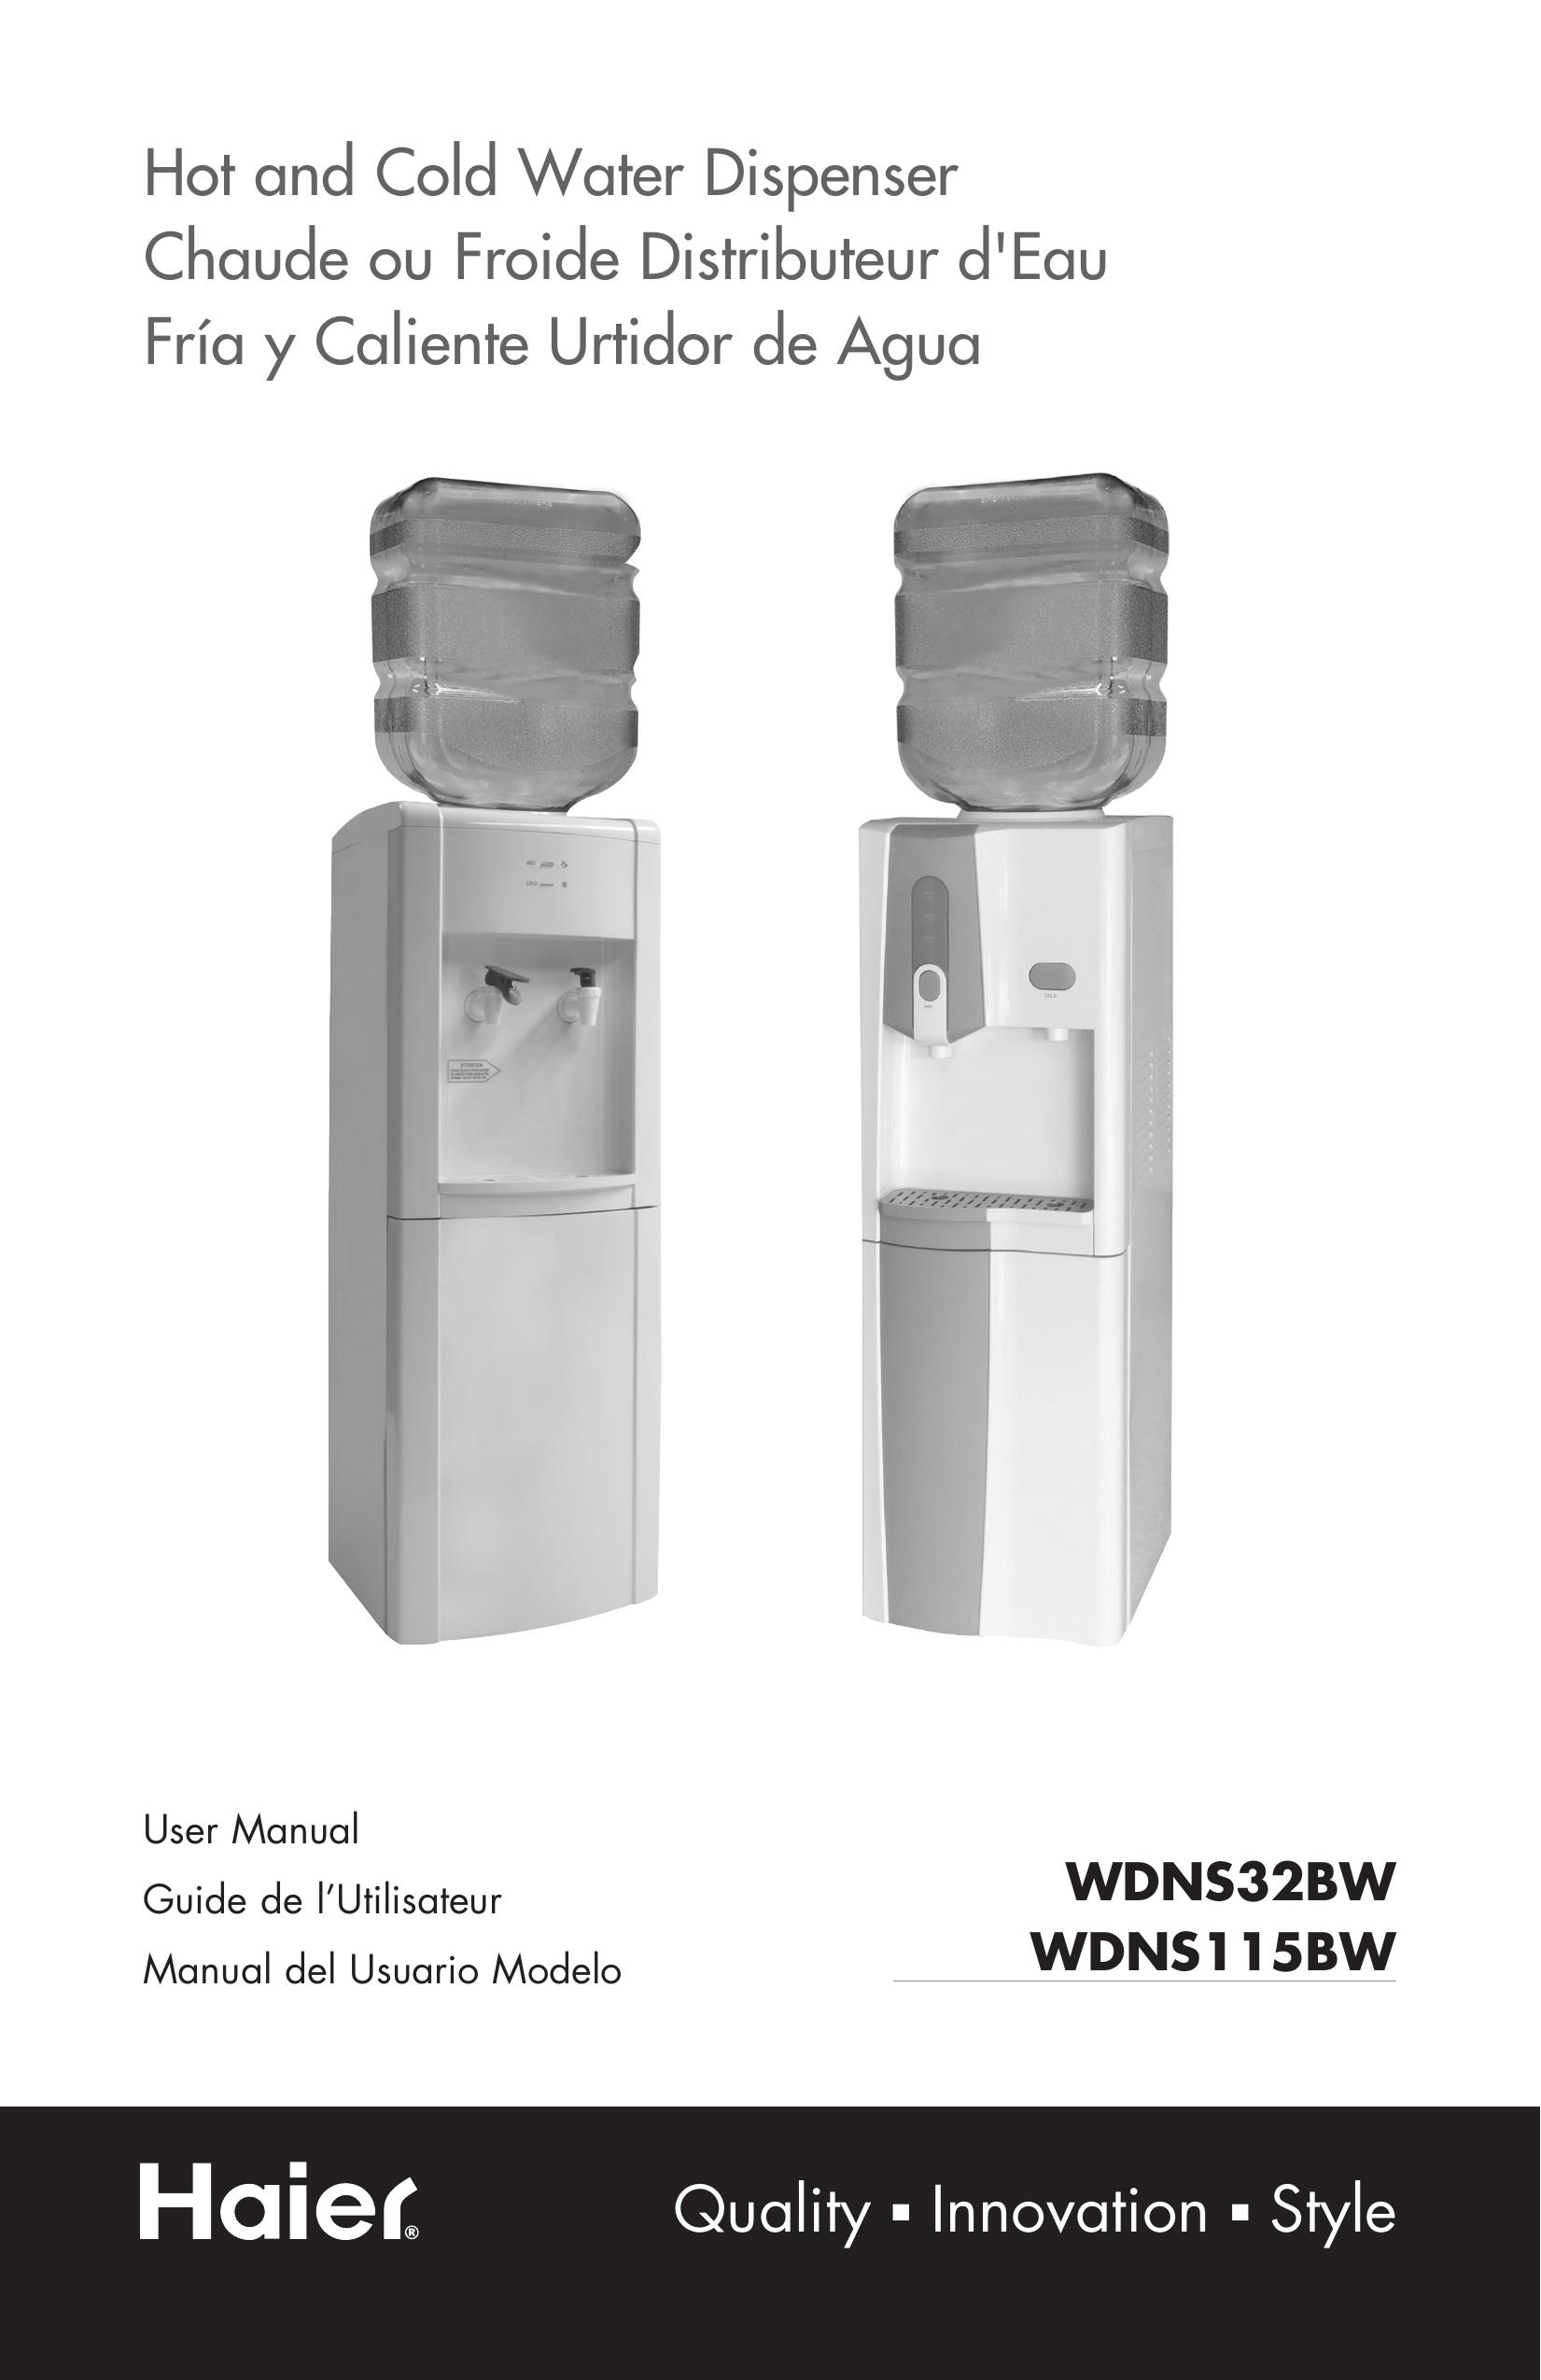 Haier WDNS115BW Water Dispenser User Manual